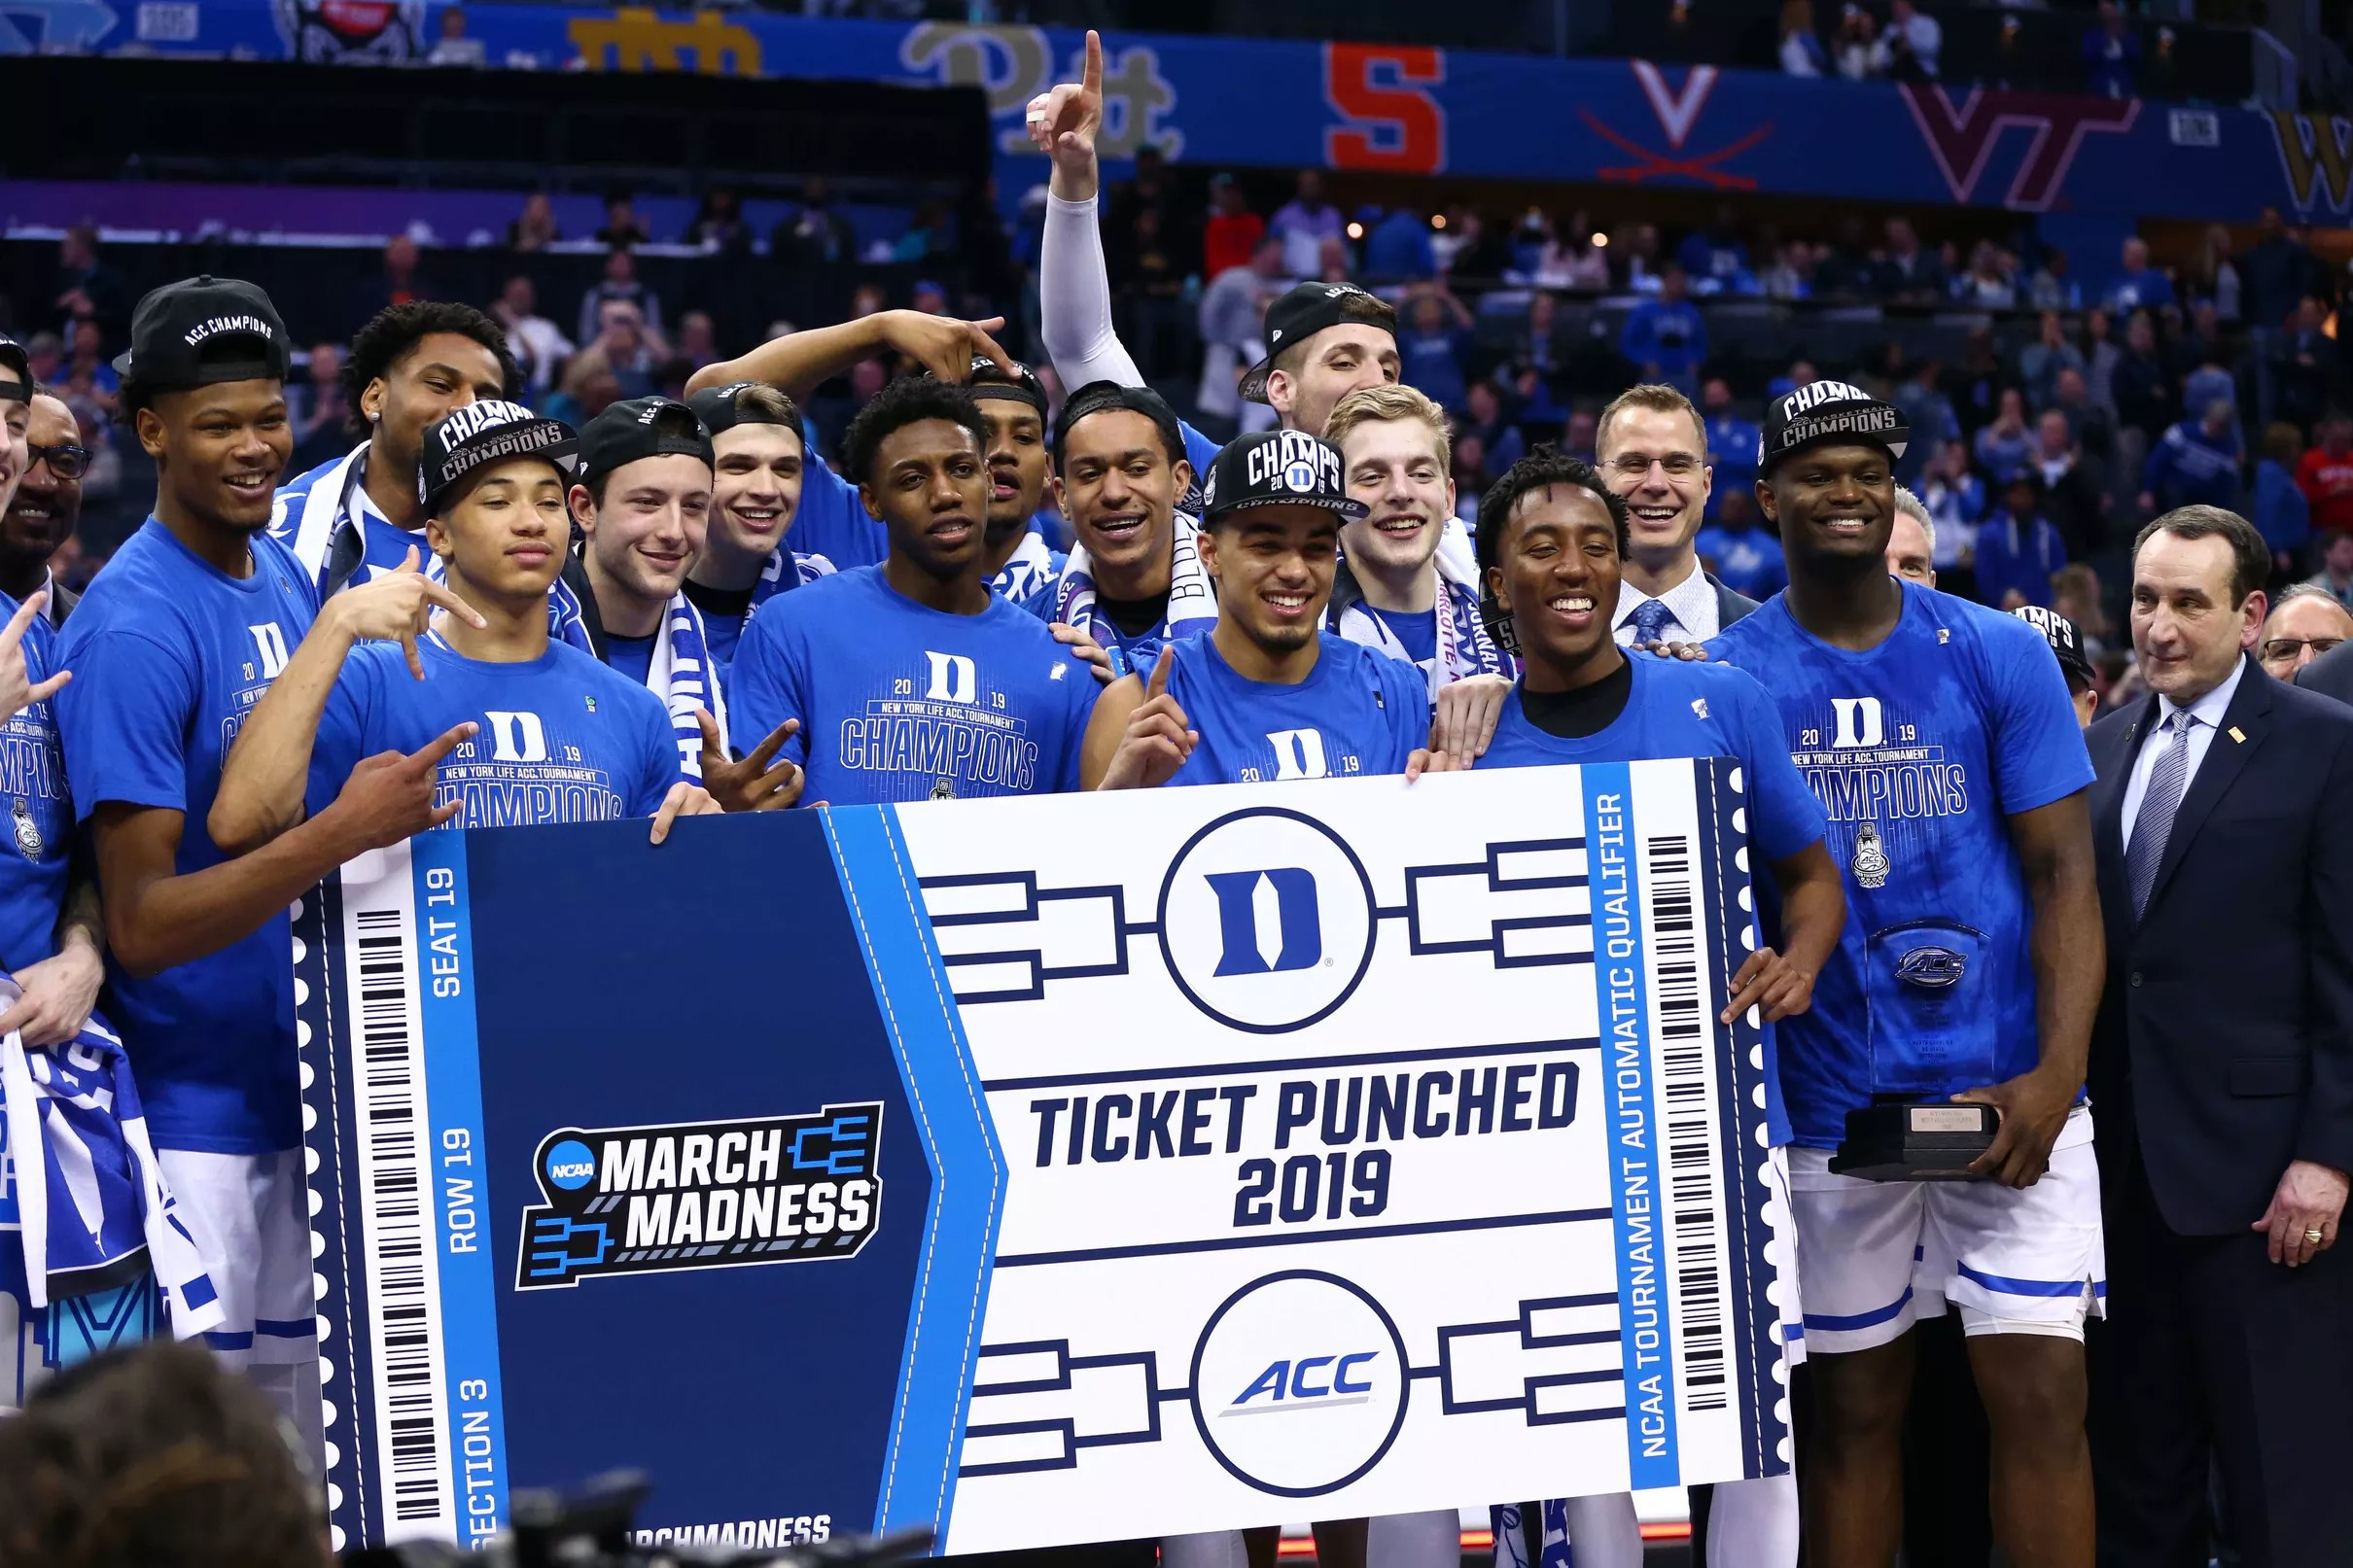 NCAA 2019 Tournament Duke Is 1 In The East